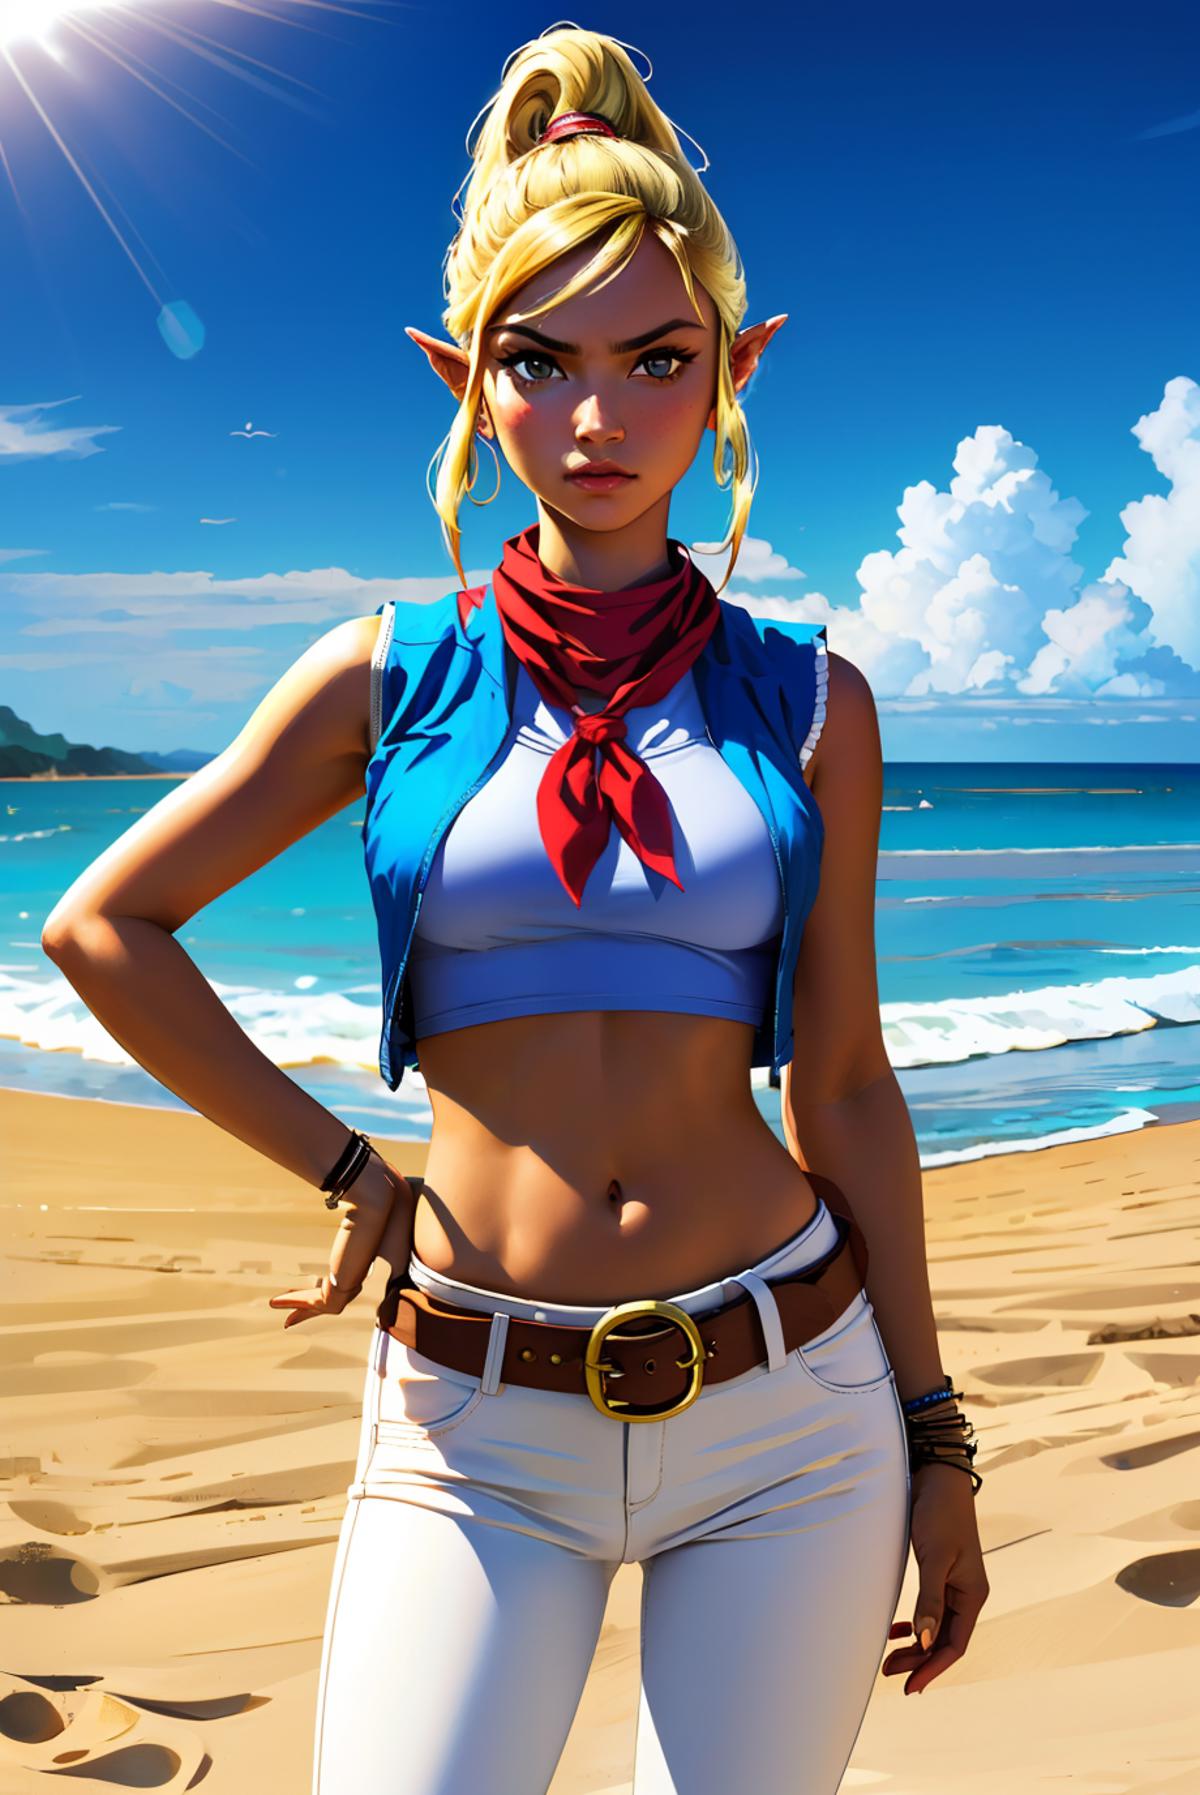 Tetra (The Legend Of Zelda: Wind Waker) image by wikkitikki